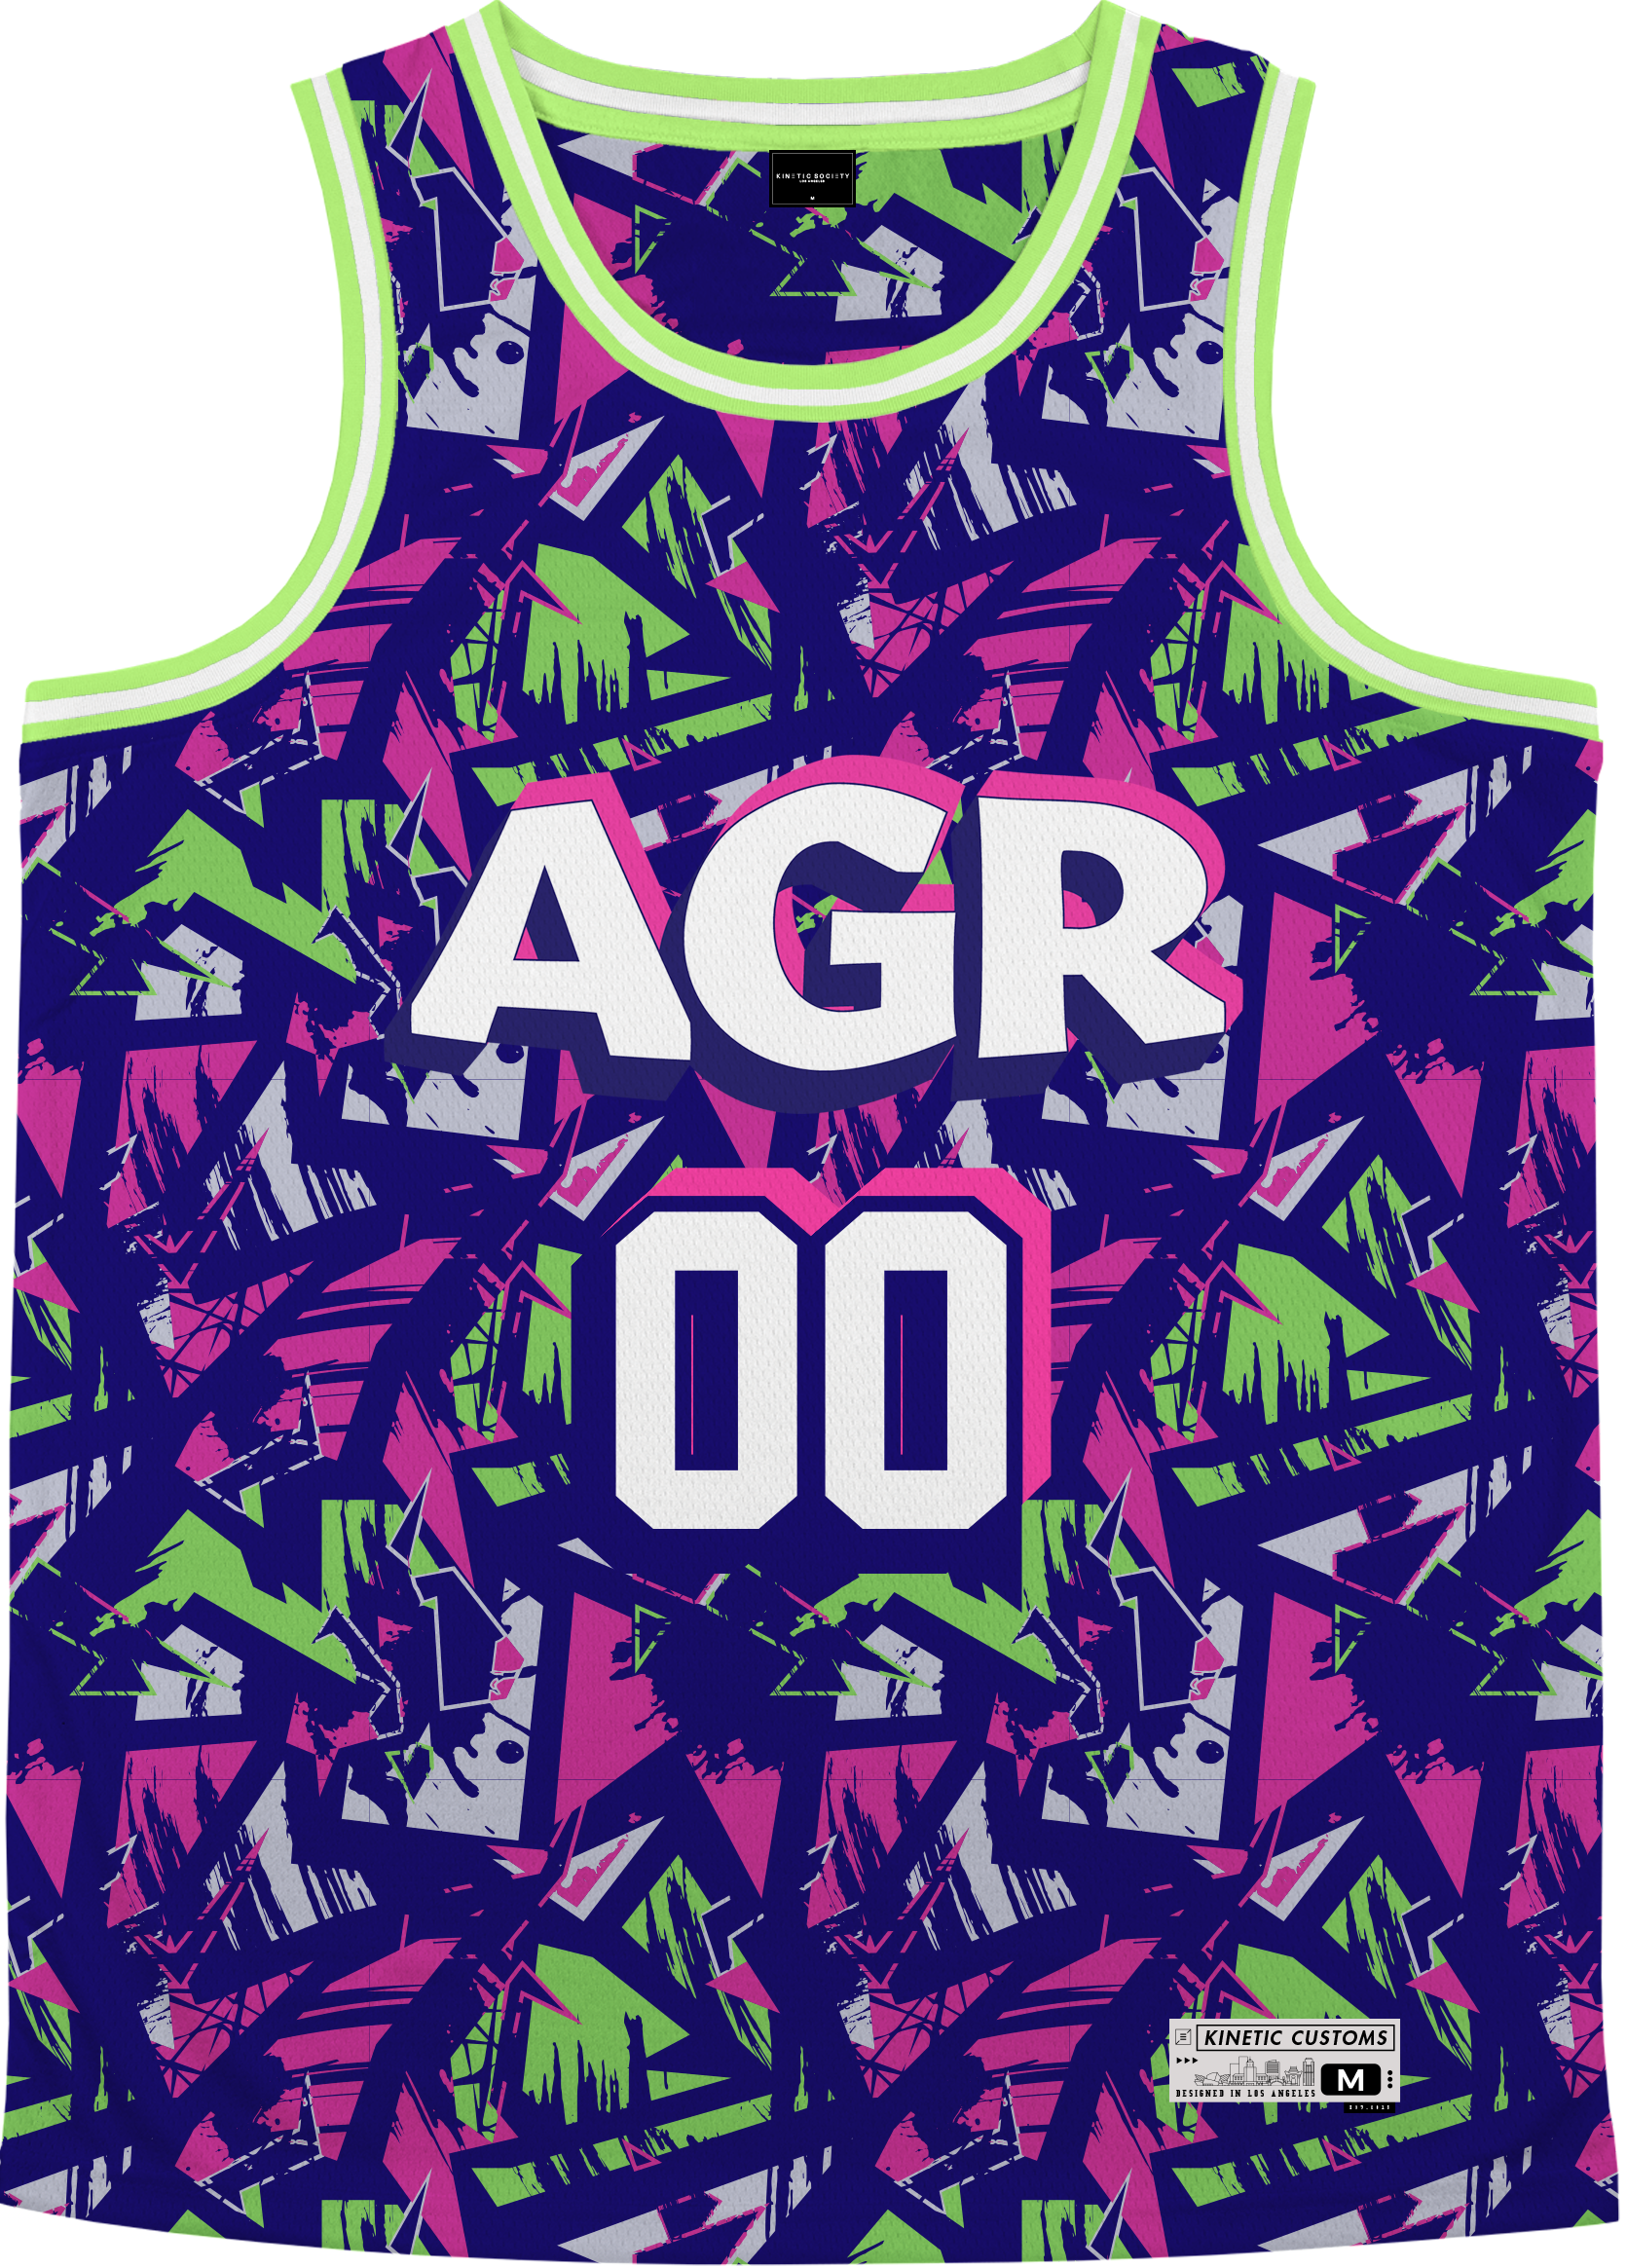 ALPHA GAMMA RHO - Purple Shrouds Basketball Jersey